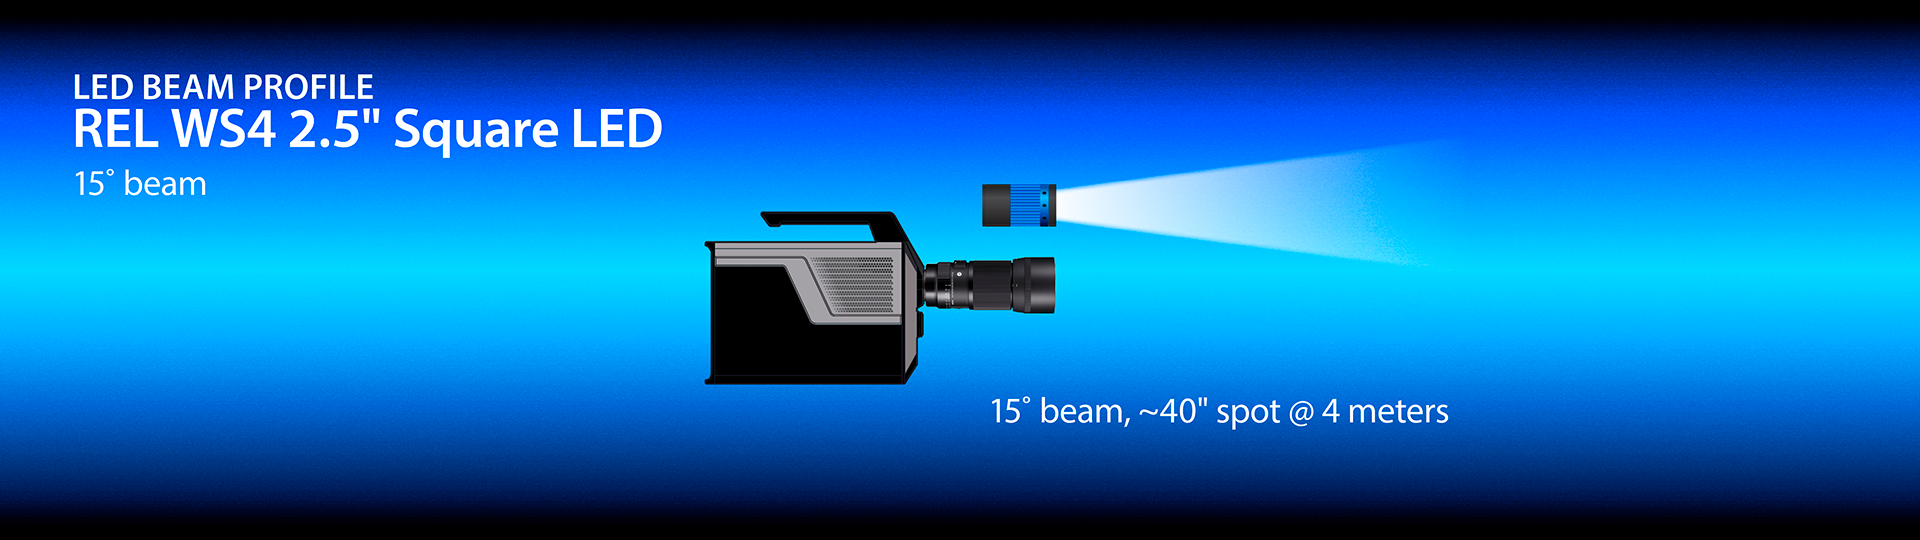 REL WS4 LED beam profile illustration.